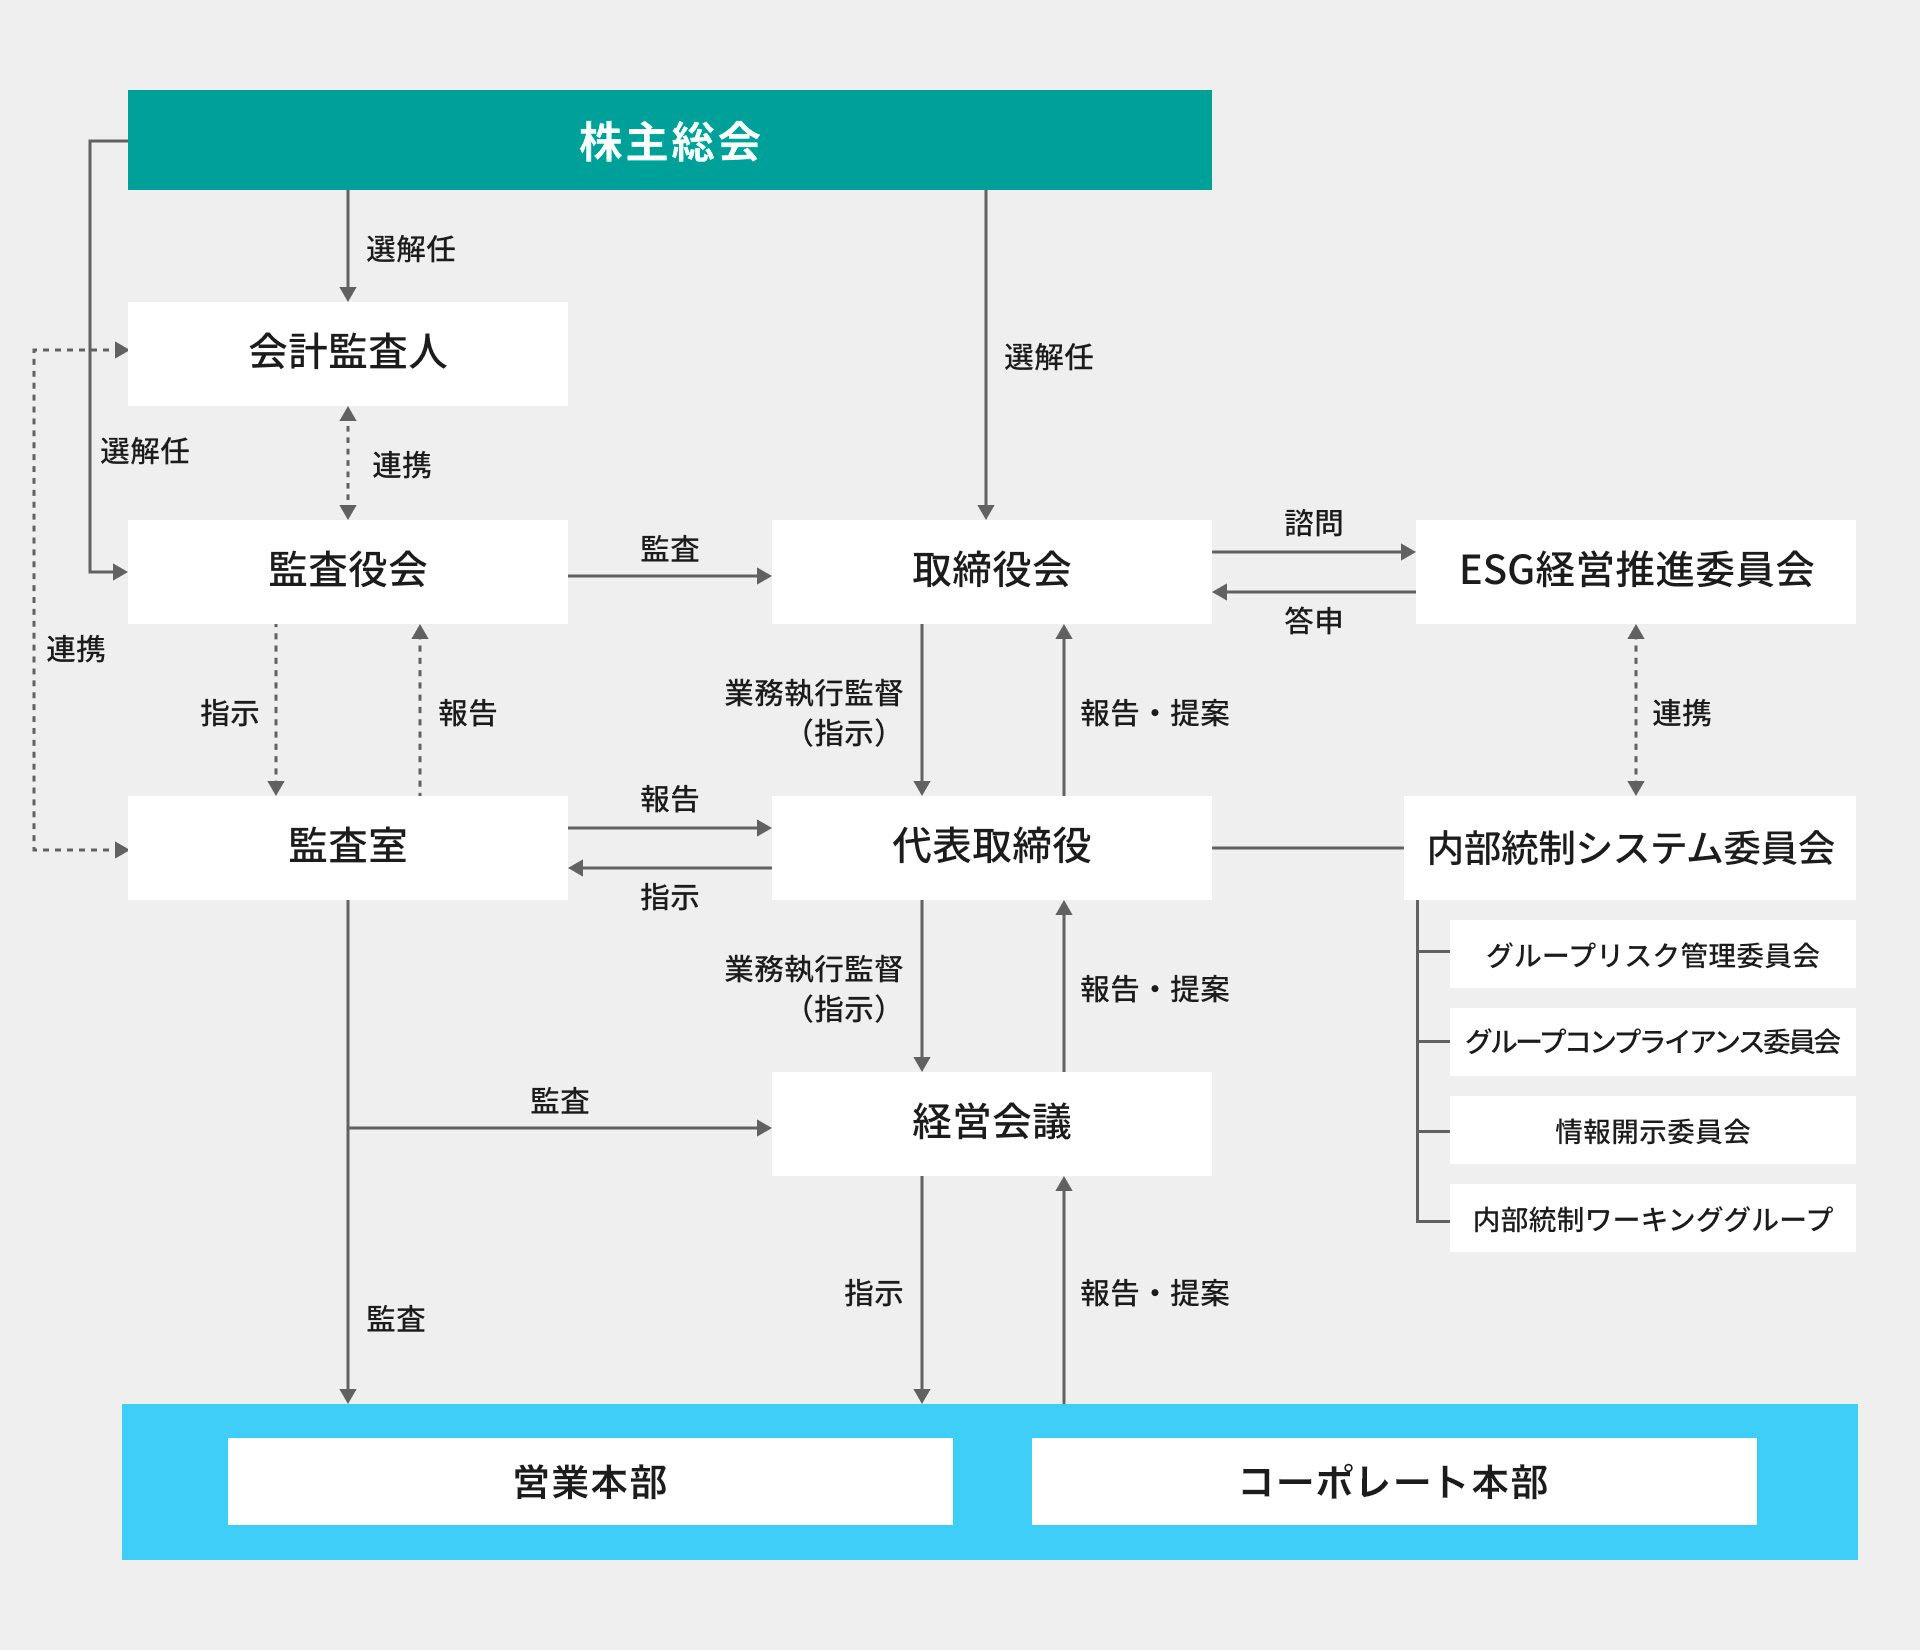 Company organization/internal control relational chart's image